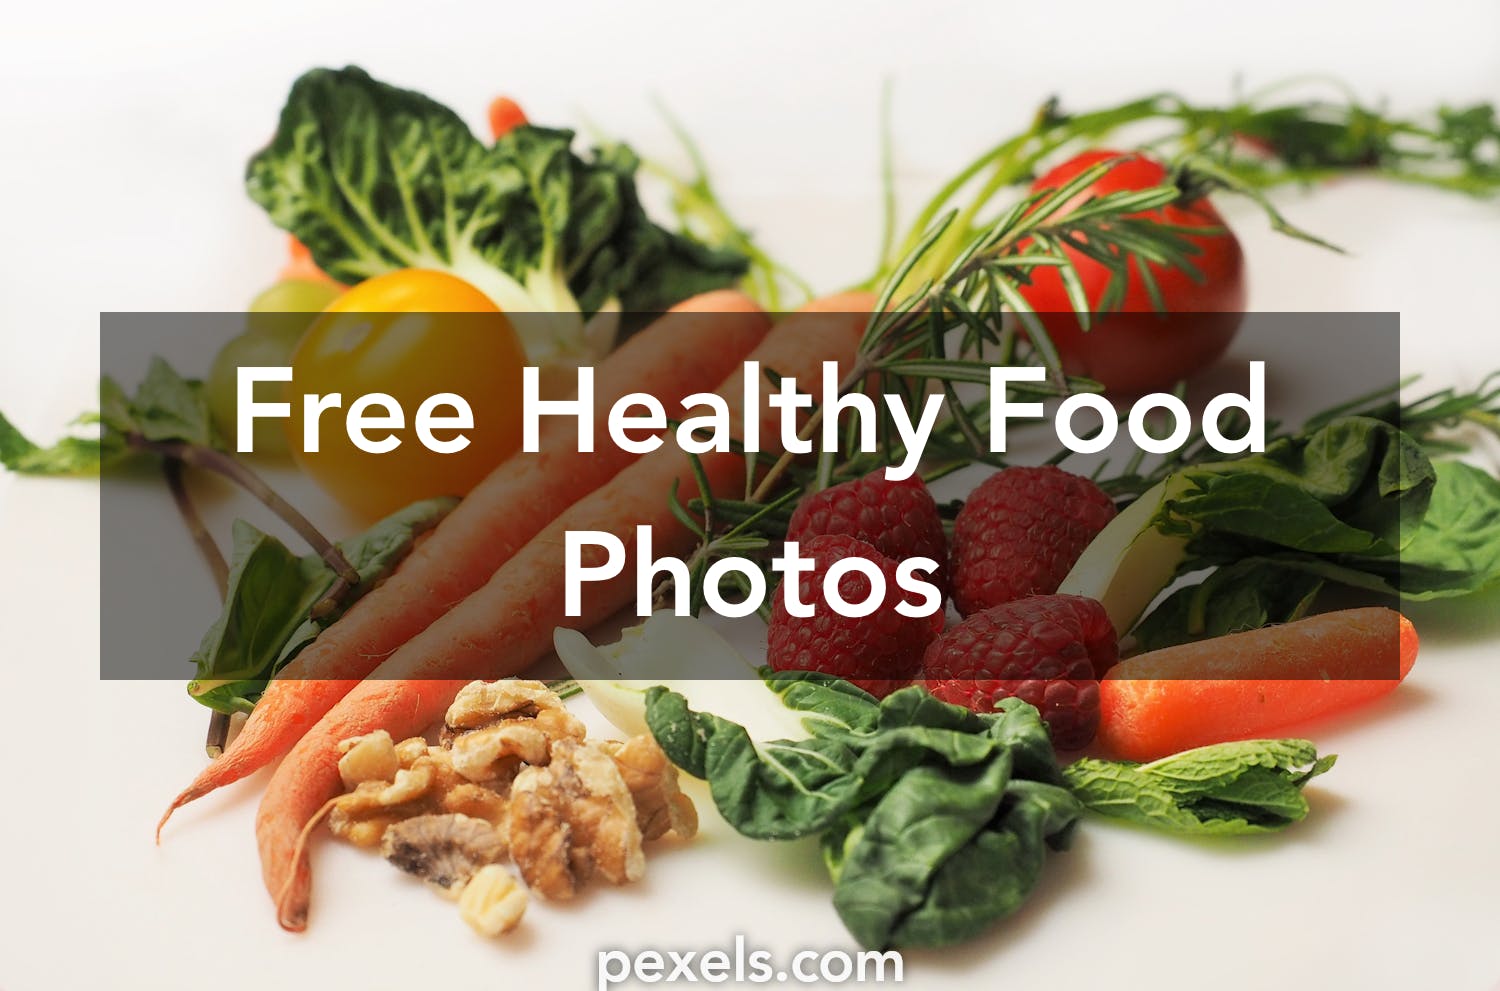 Free Stock Photos Of Healthy Food · Pexels